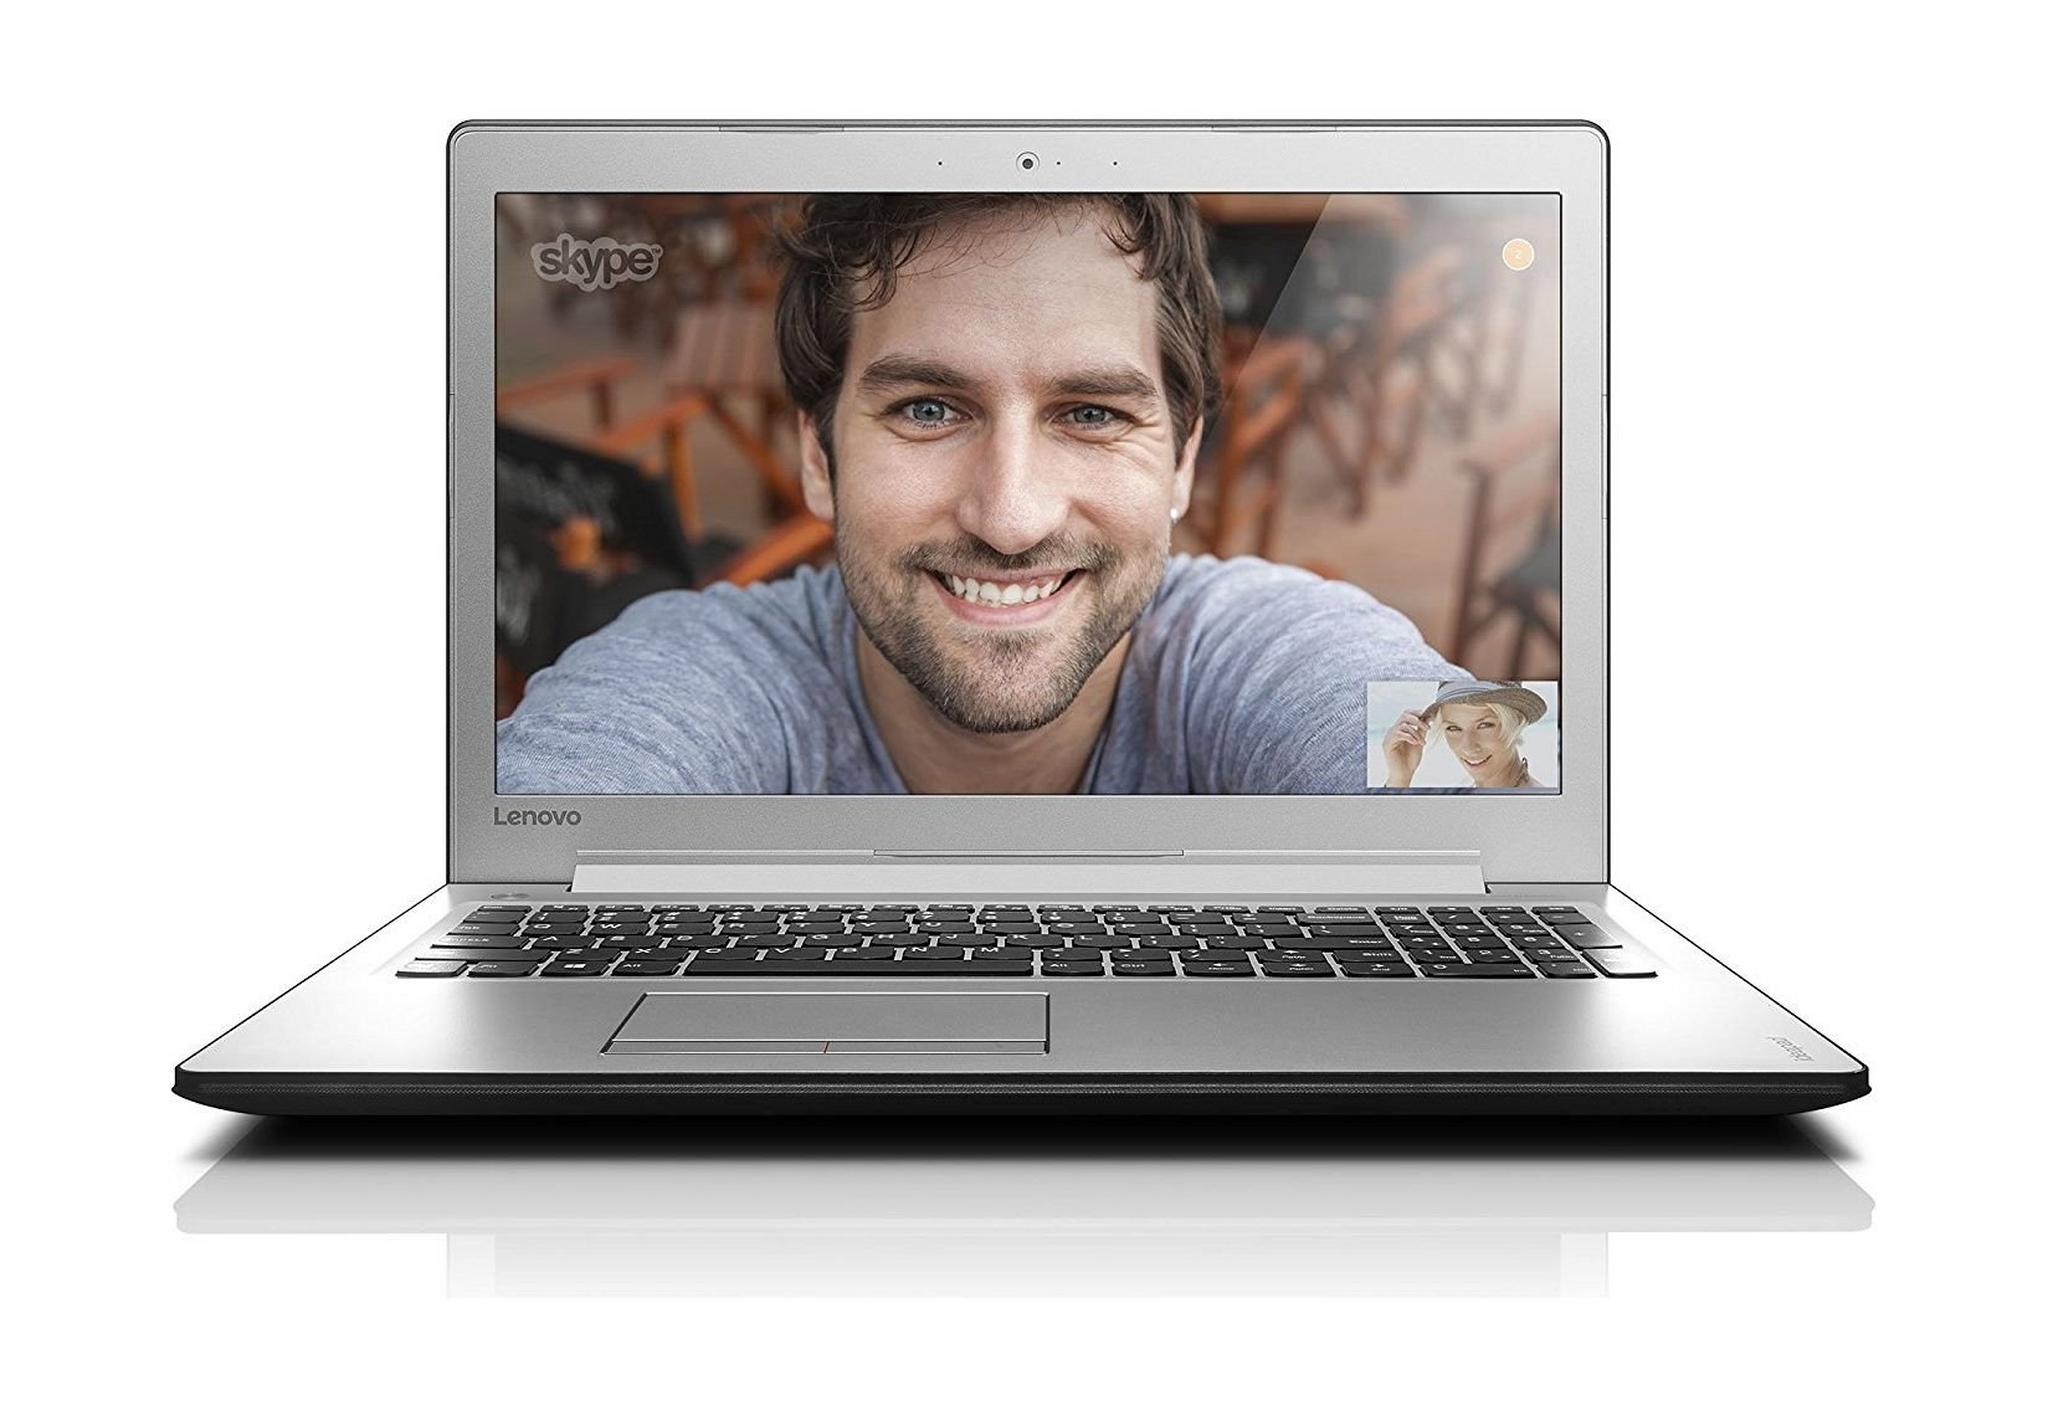 Lenovo Ideapad 510 Core-i5 6GB RAM 1TB HDD 4GB Nvidia 15.6-inch Laptop – Grey